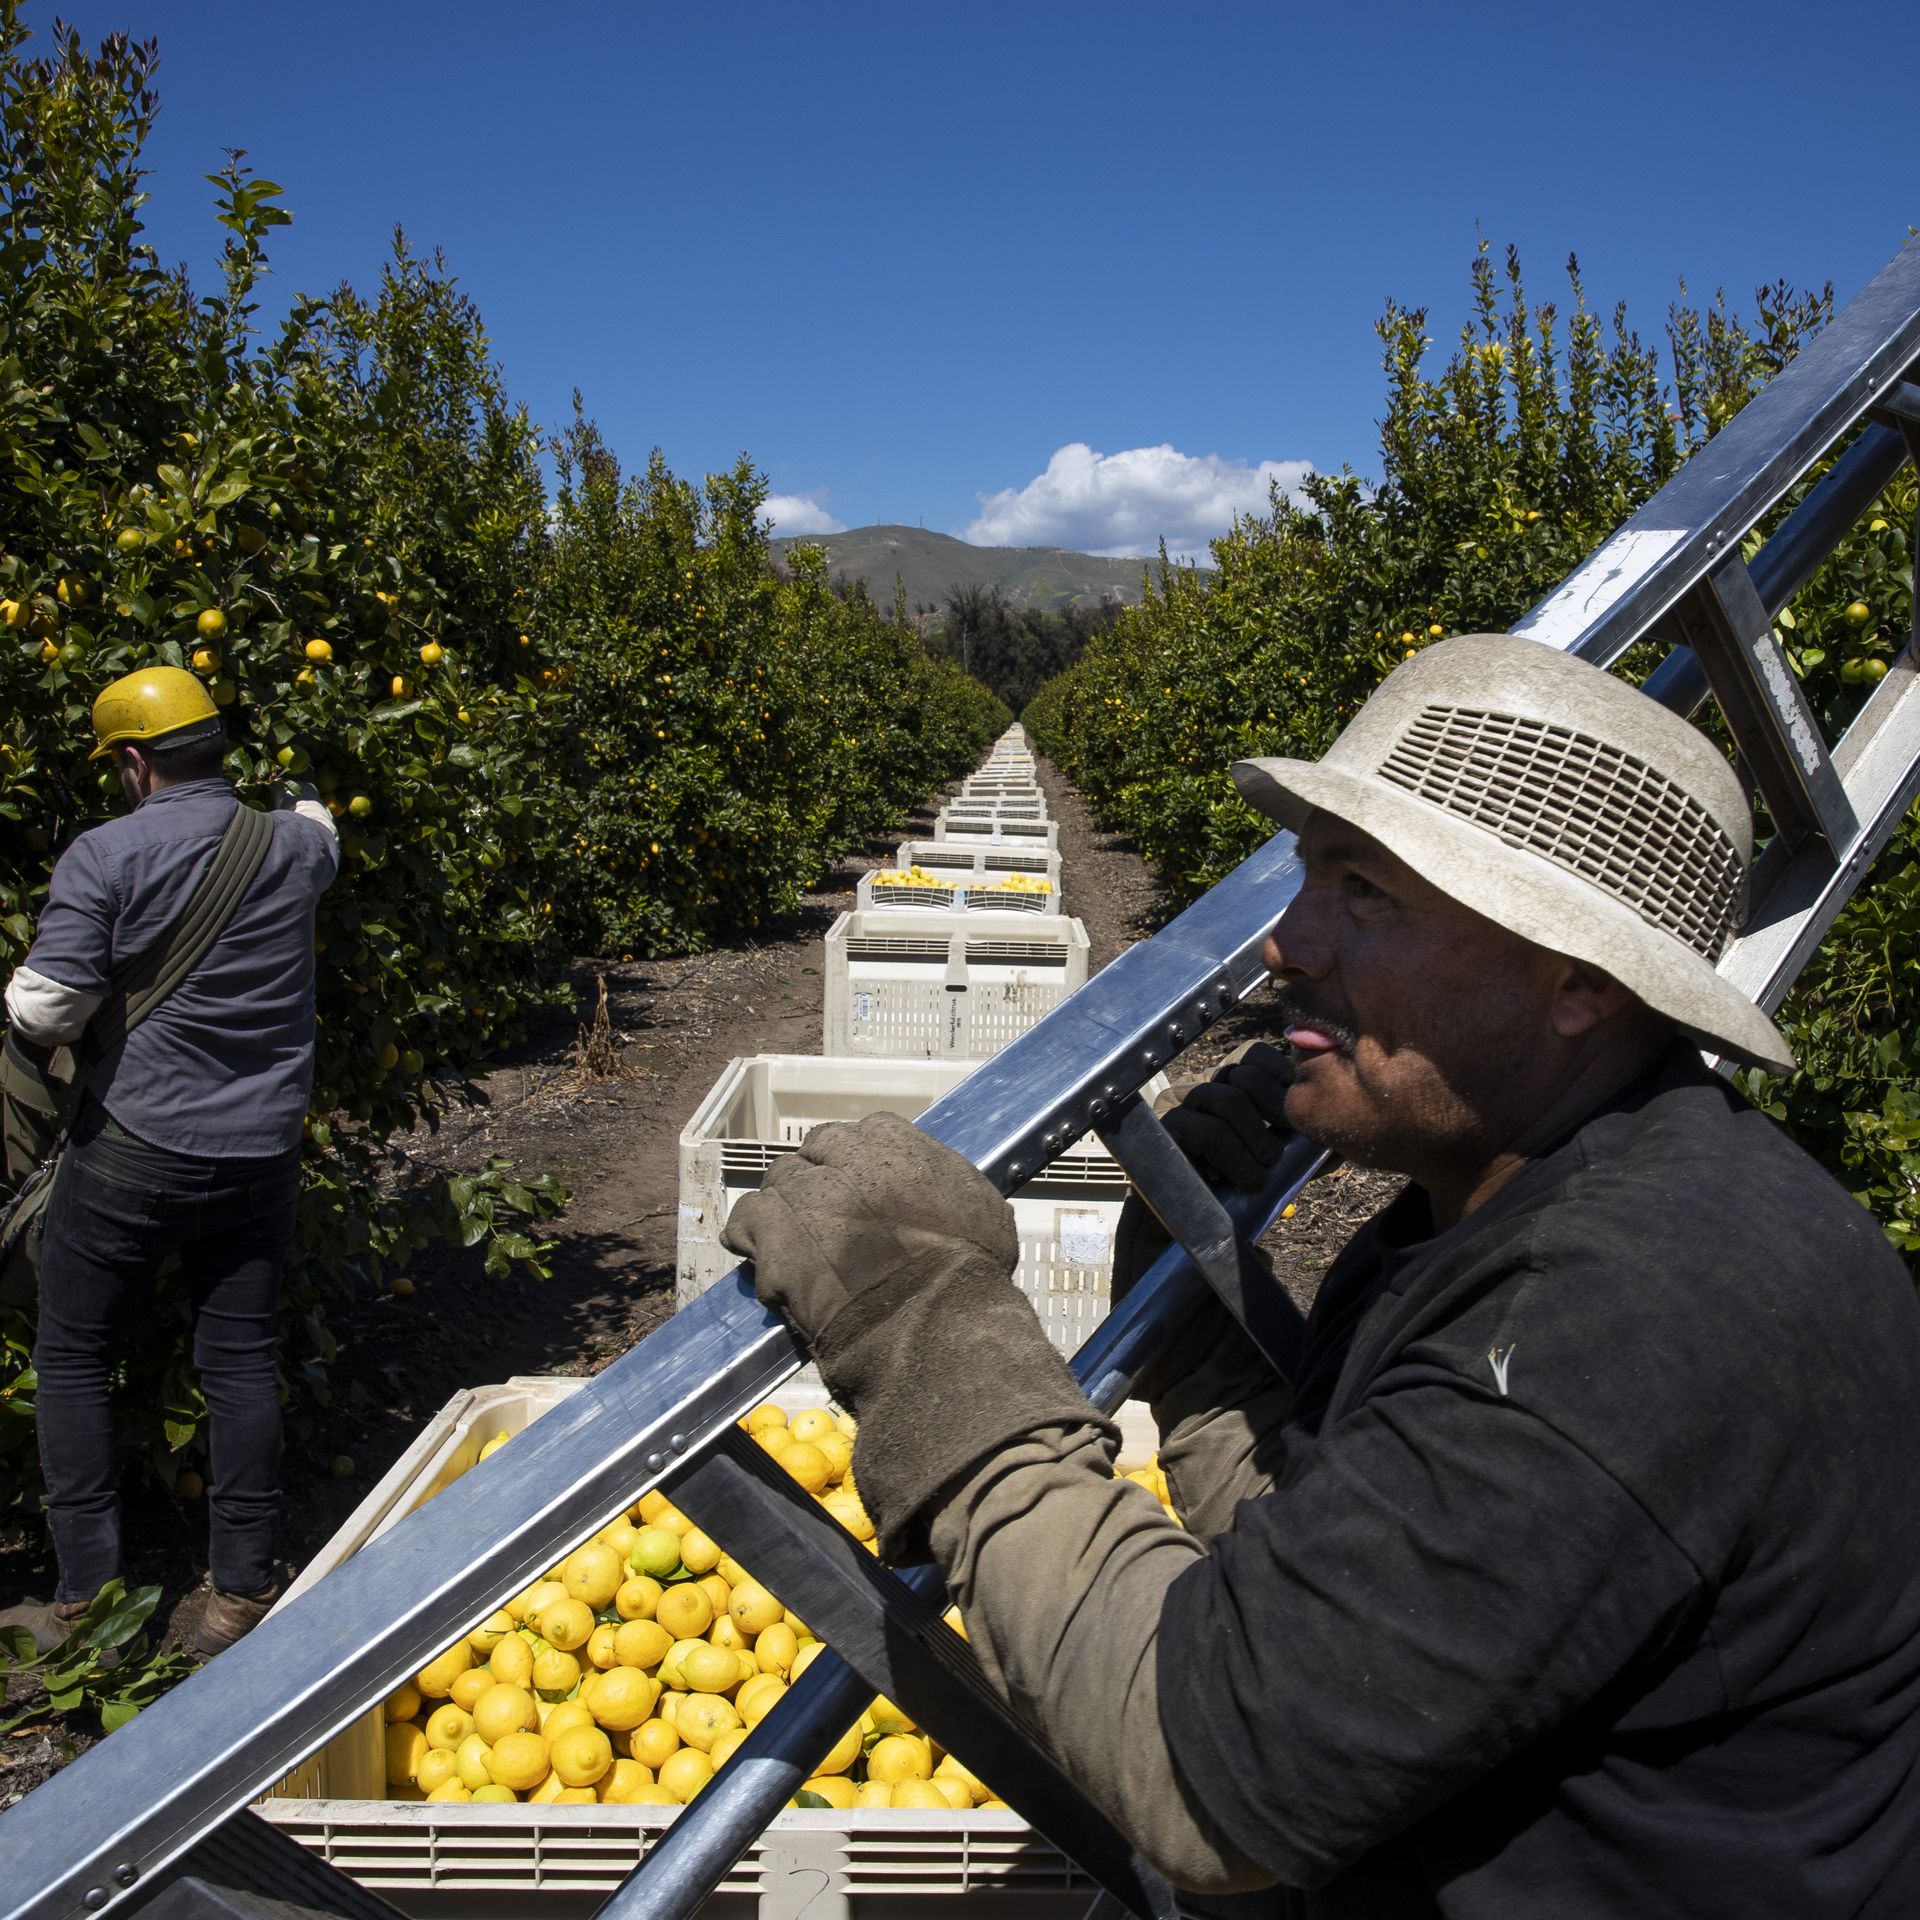 Farmworkers pick lemons.